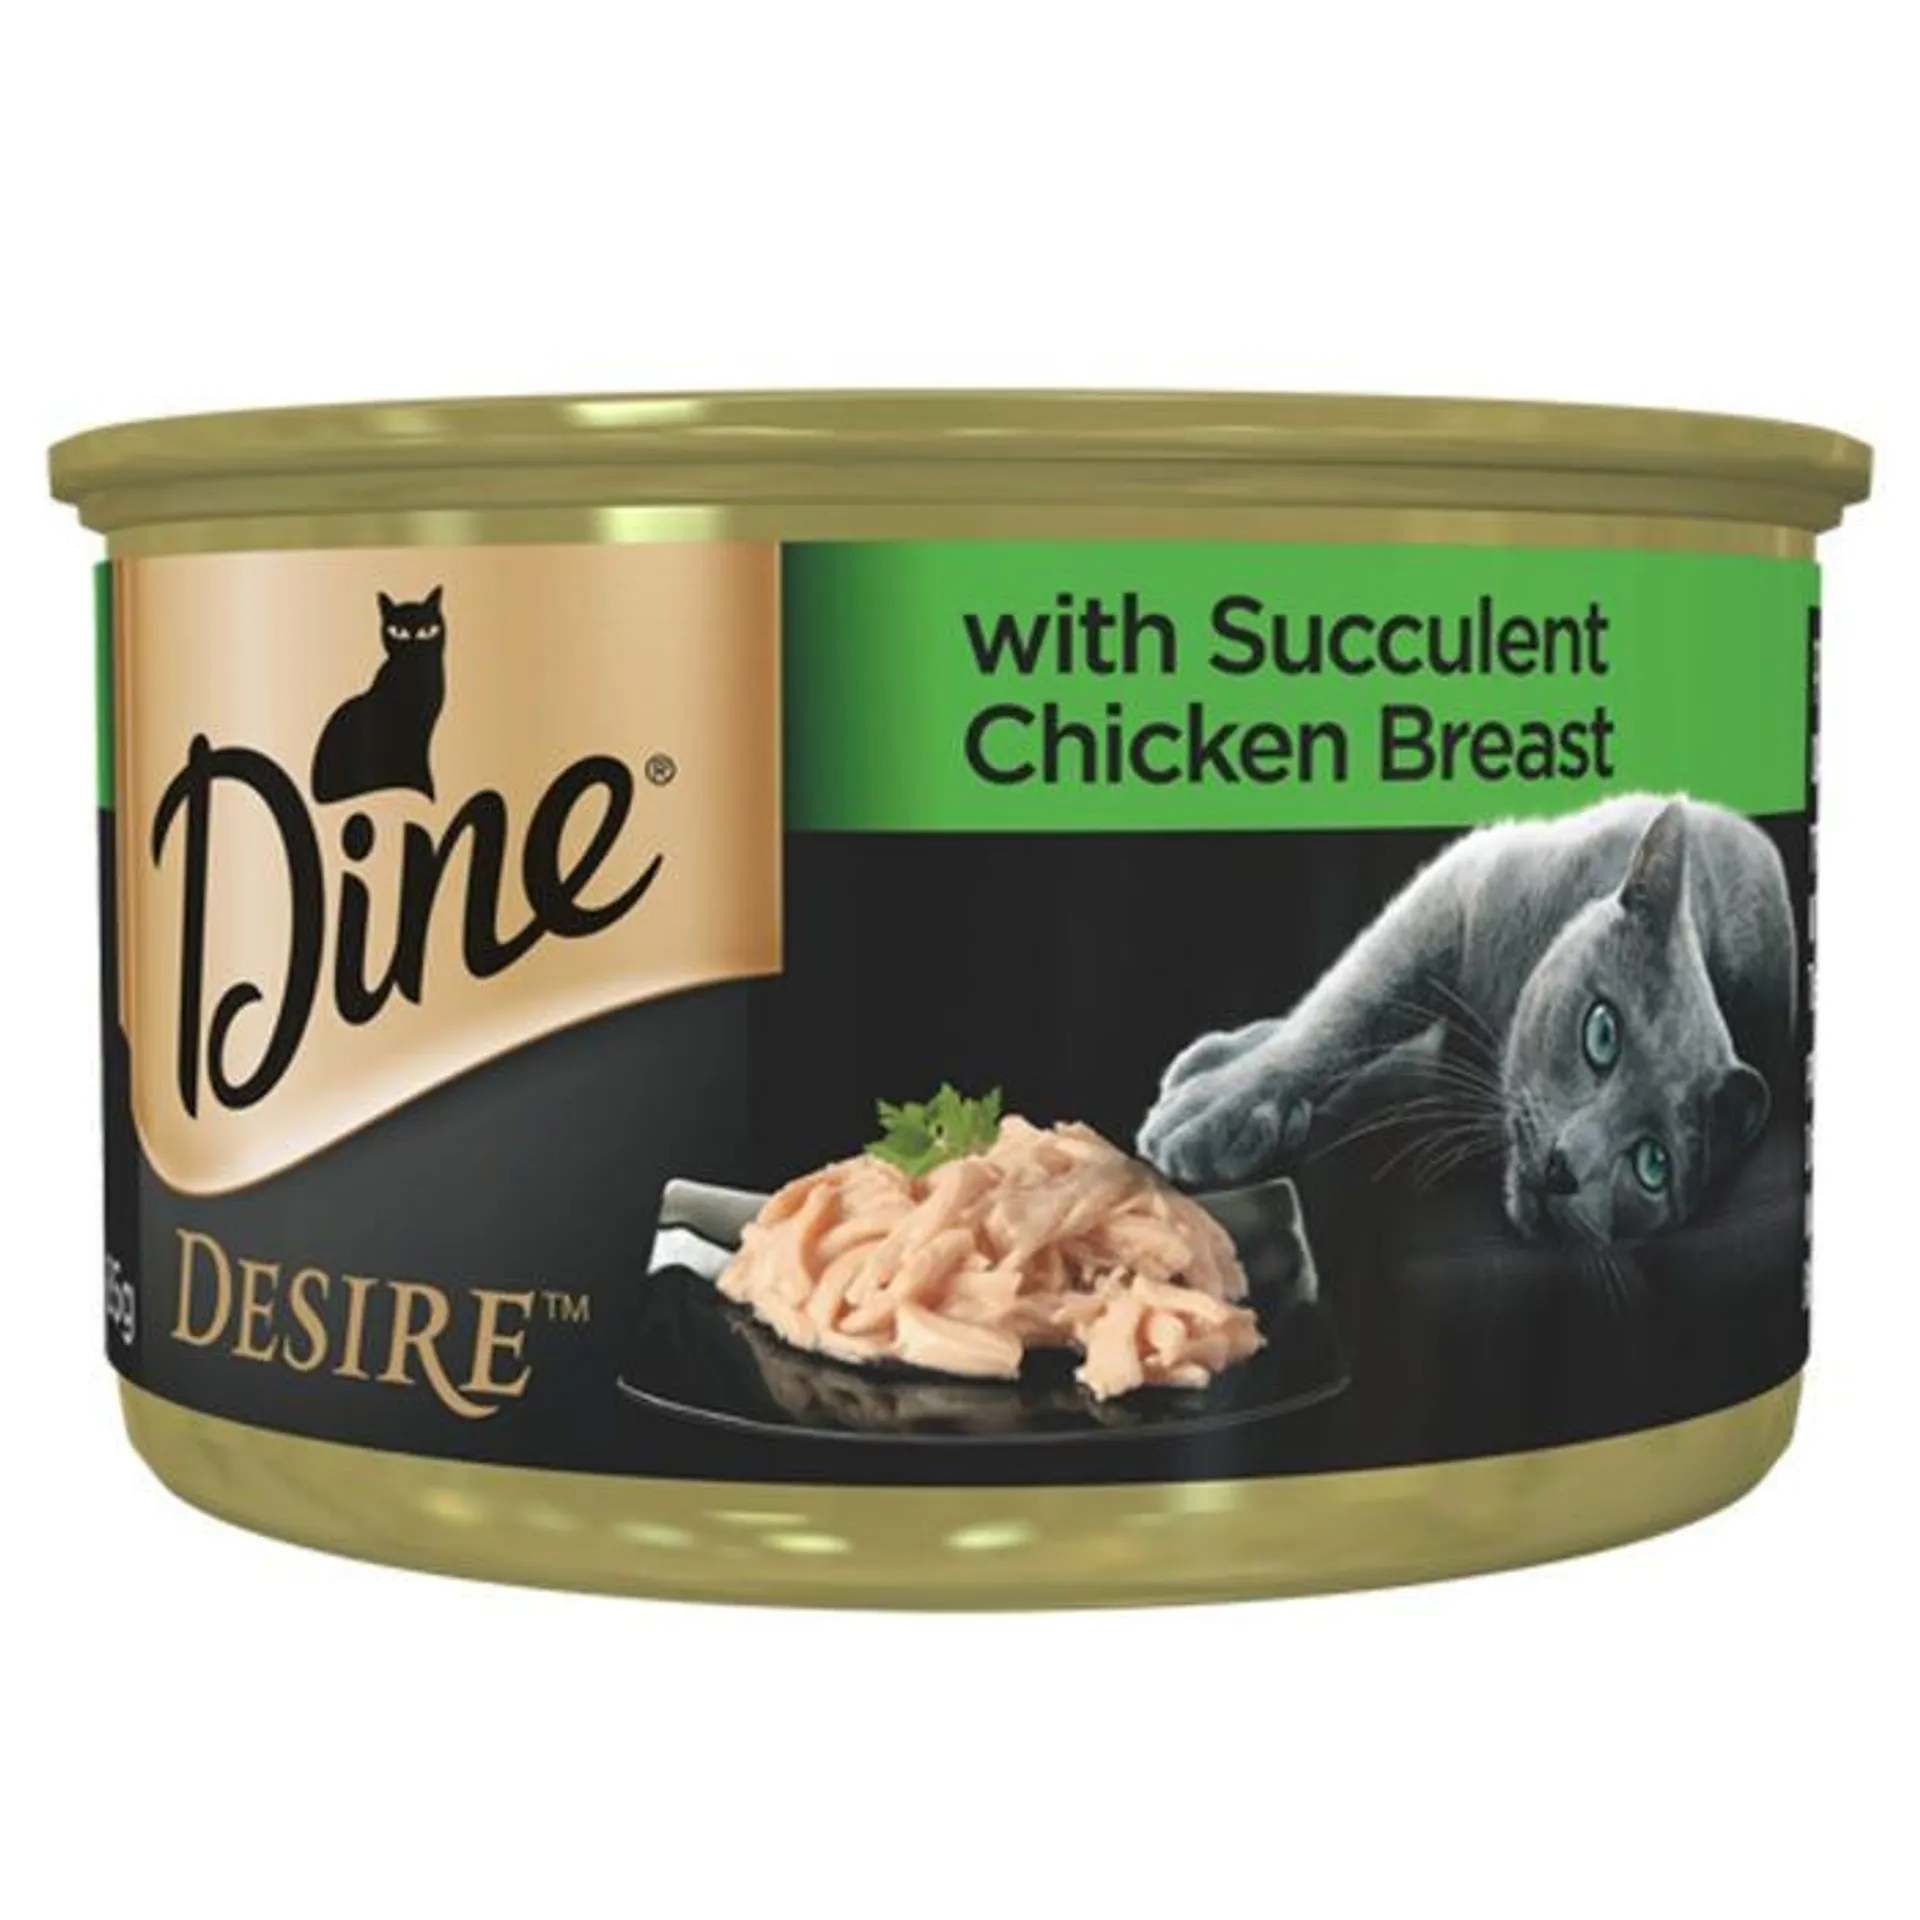 Dine Desire Succulent Chicken Cat Food 85g